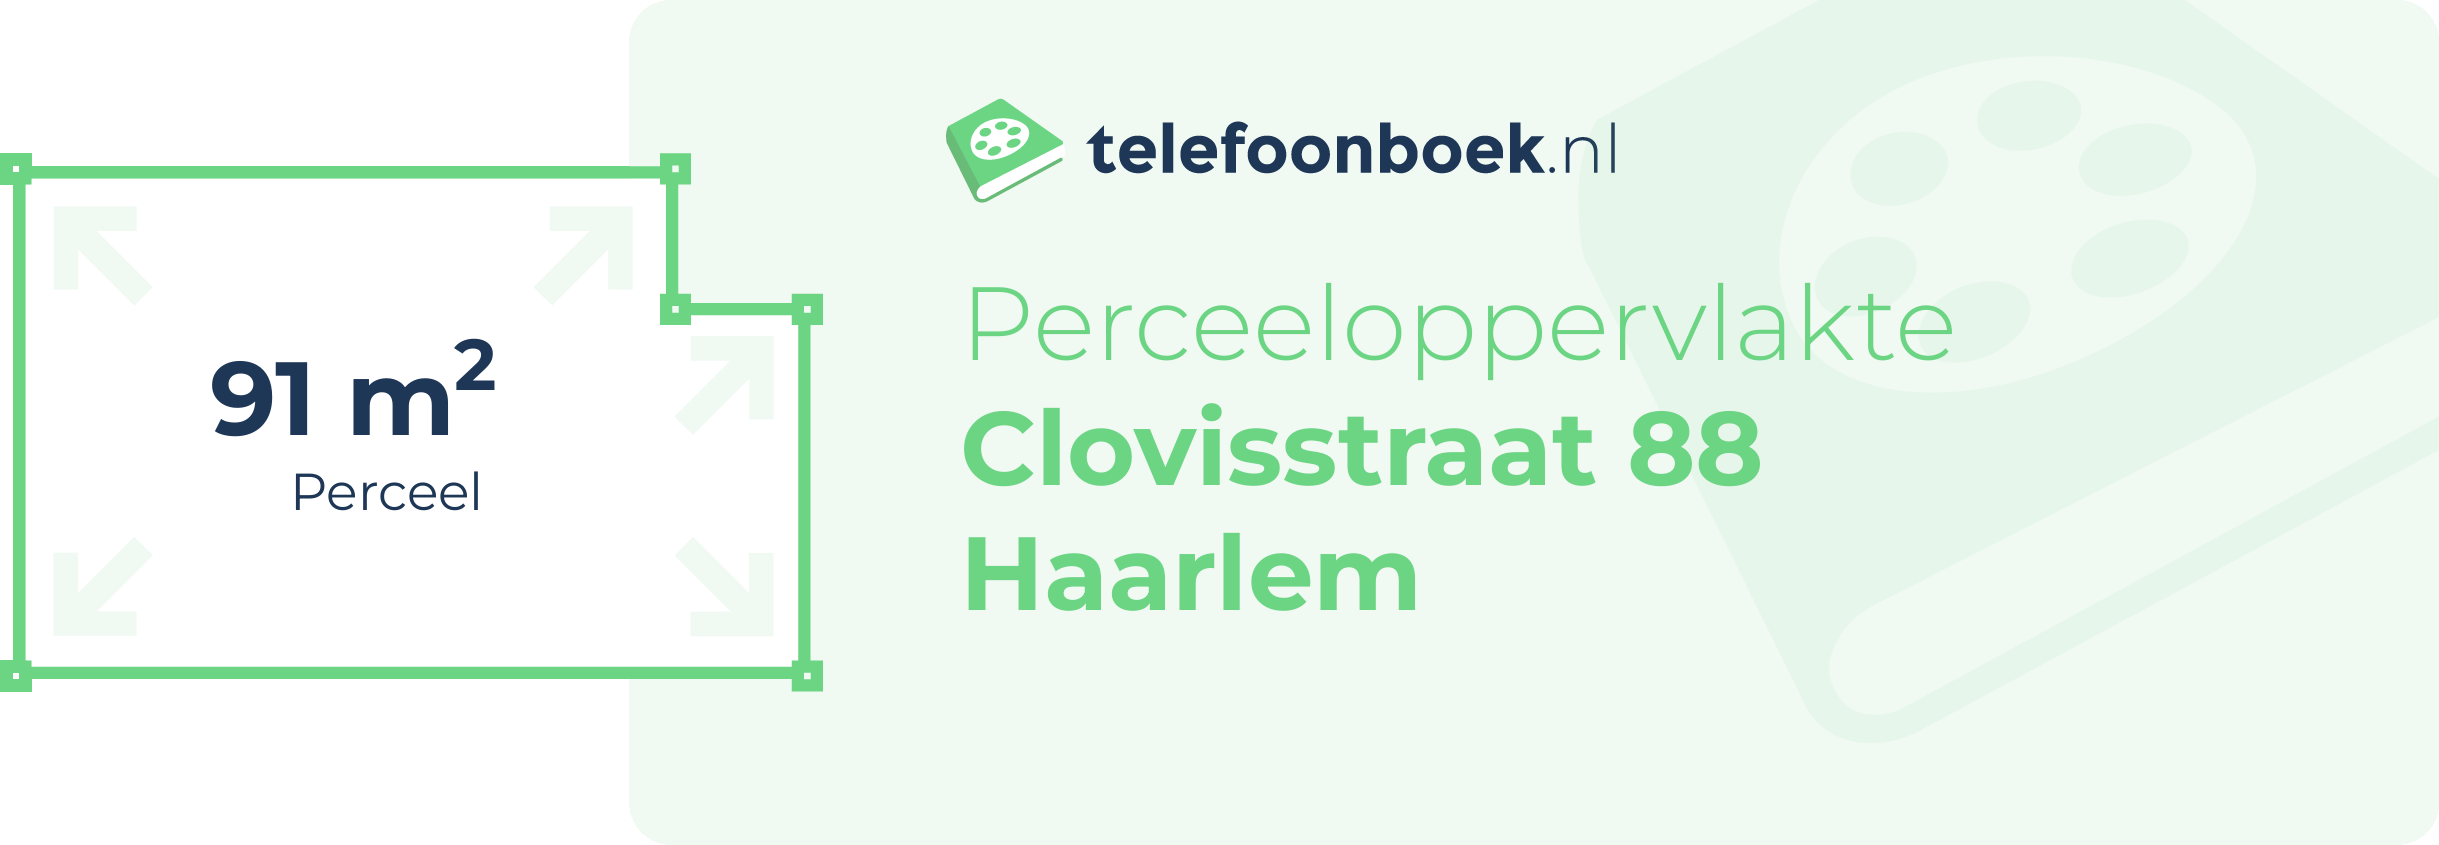 Perceeloppervlakte Clovisstraat 88 Haarlem